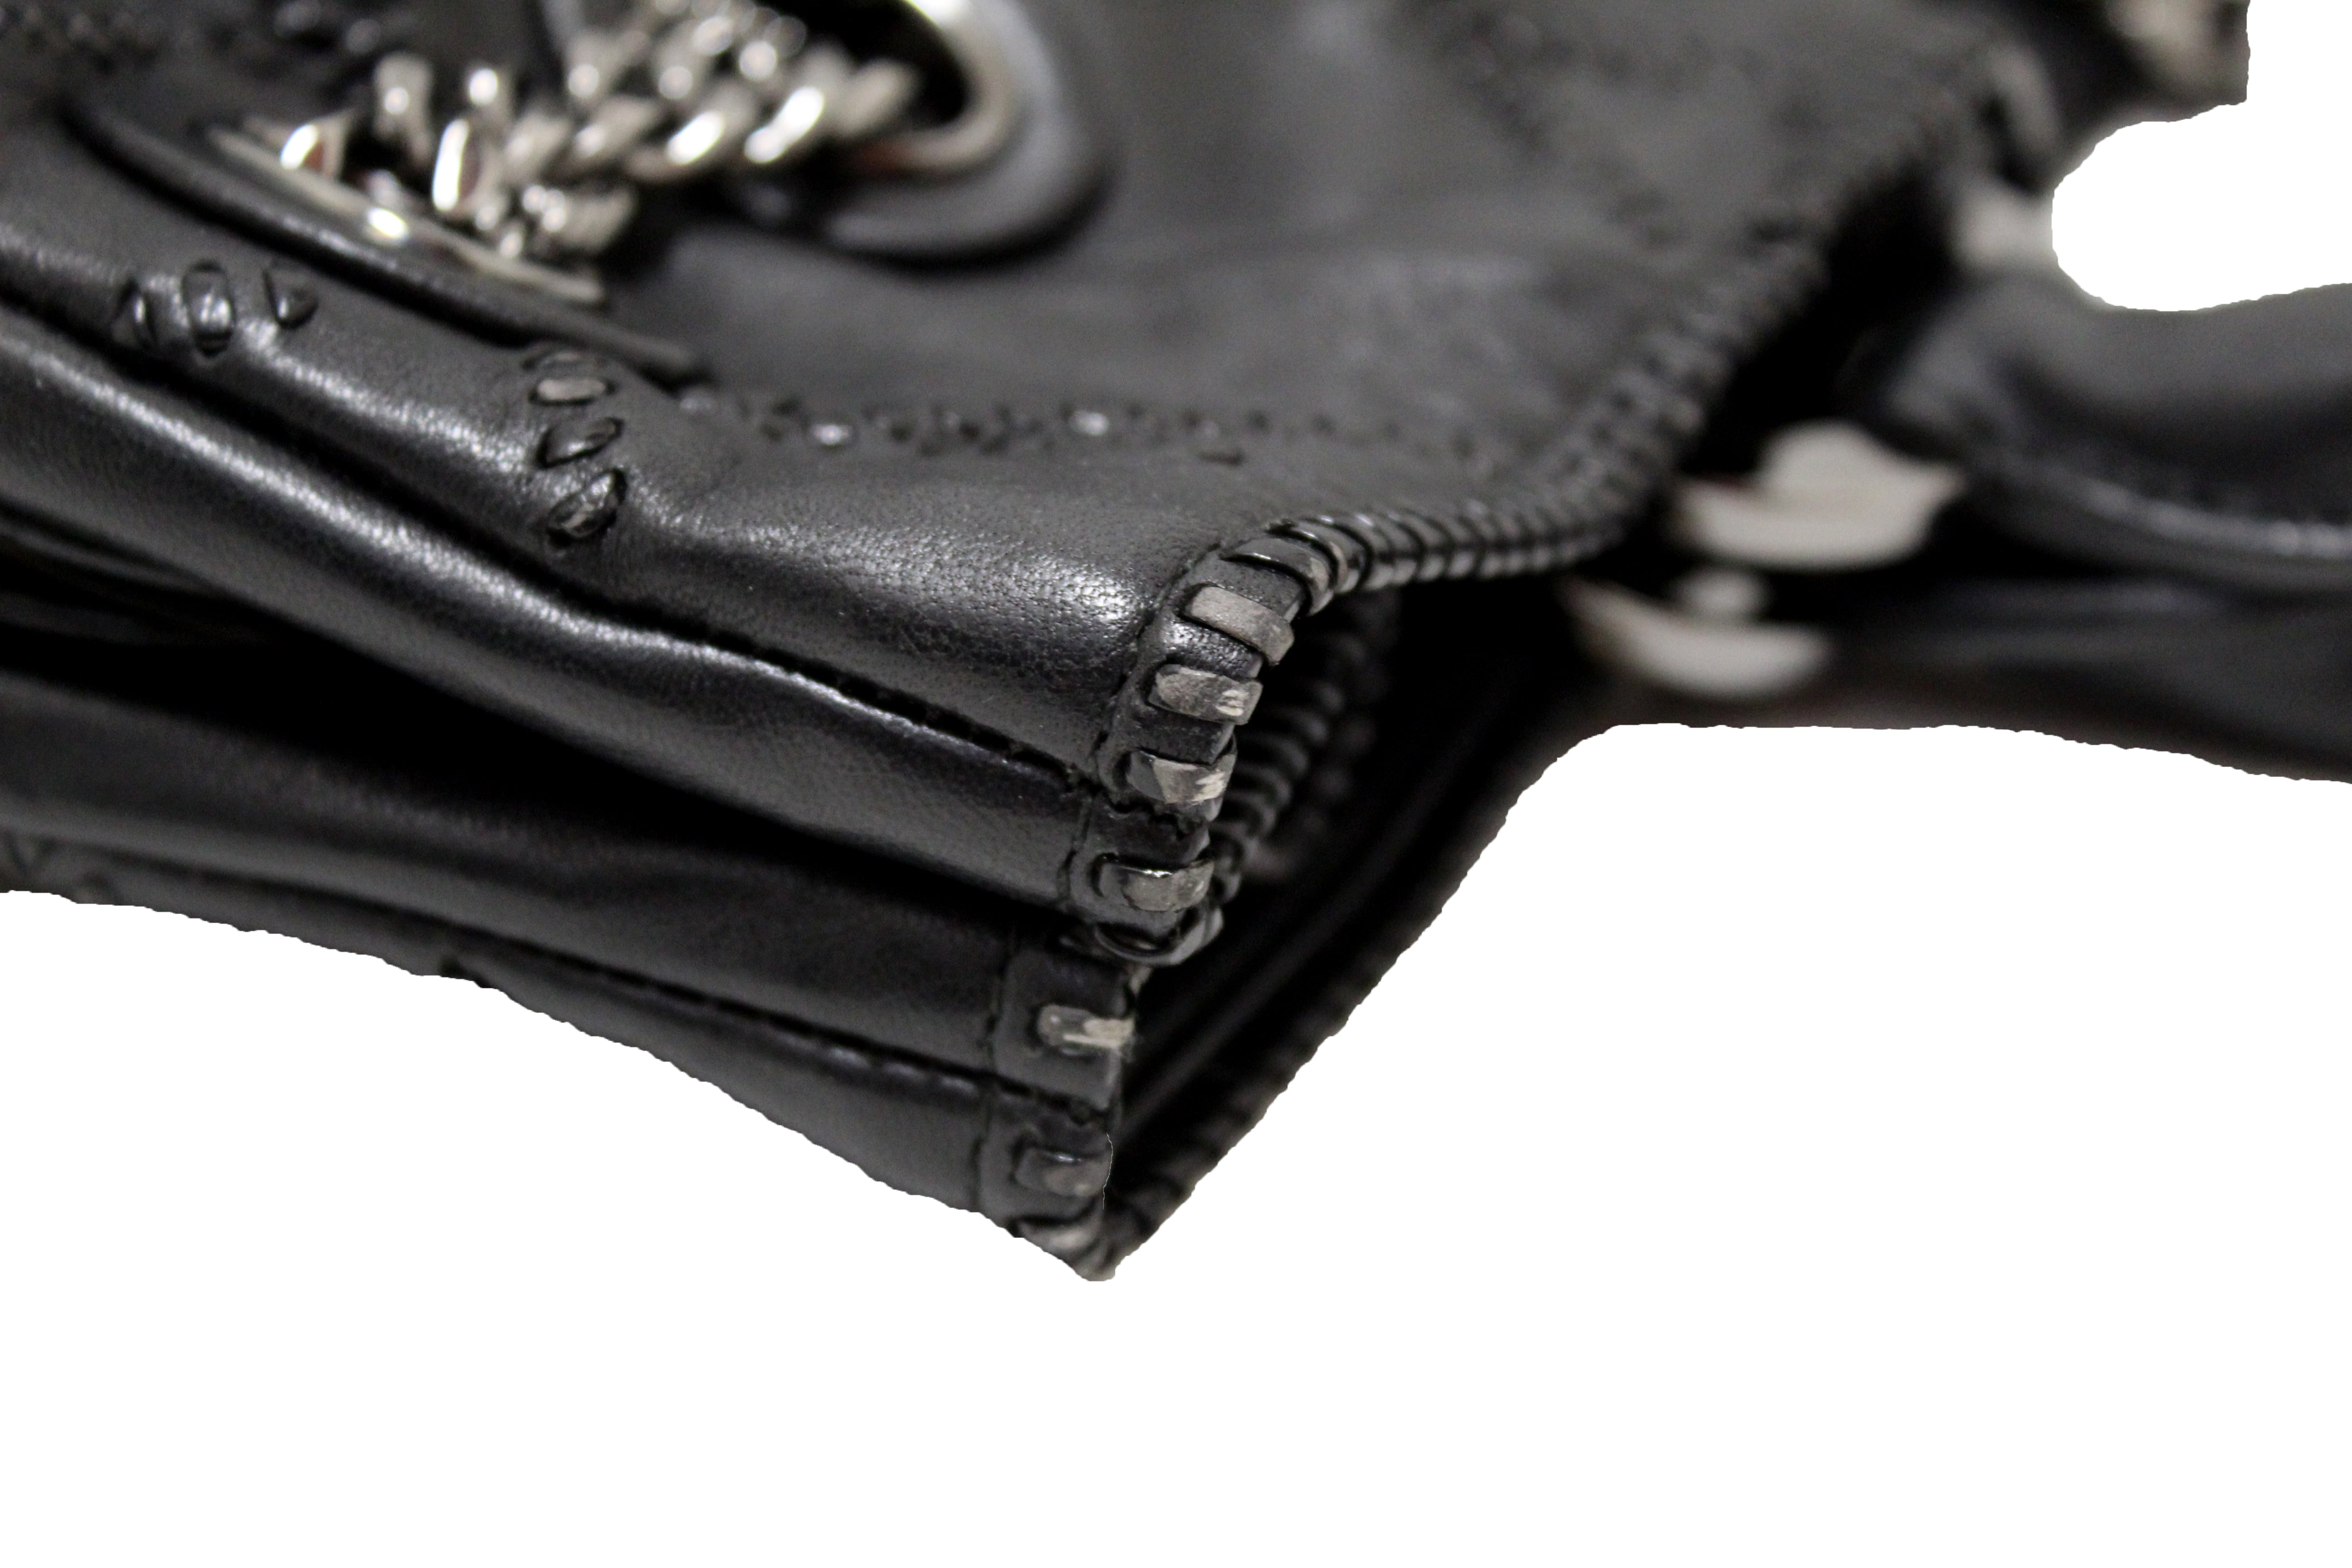 Authentic Christian Dior Black Leather Chri Chri Shoulder Tote Bag